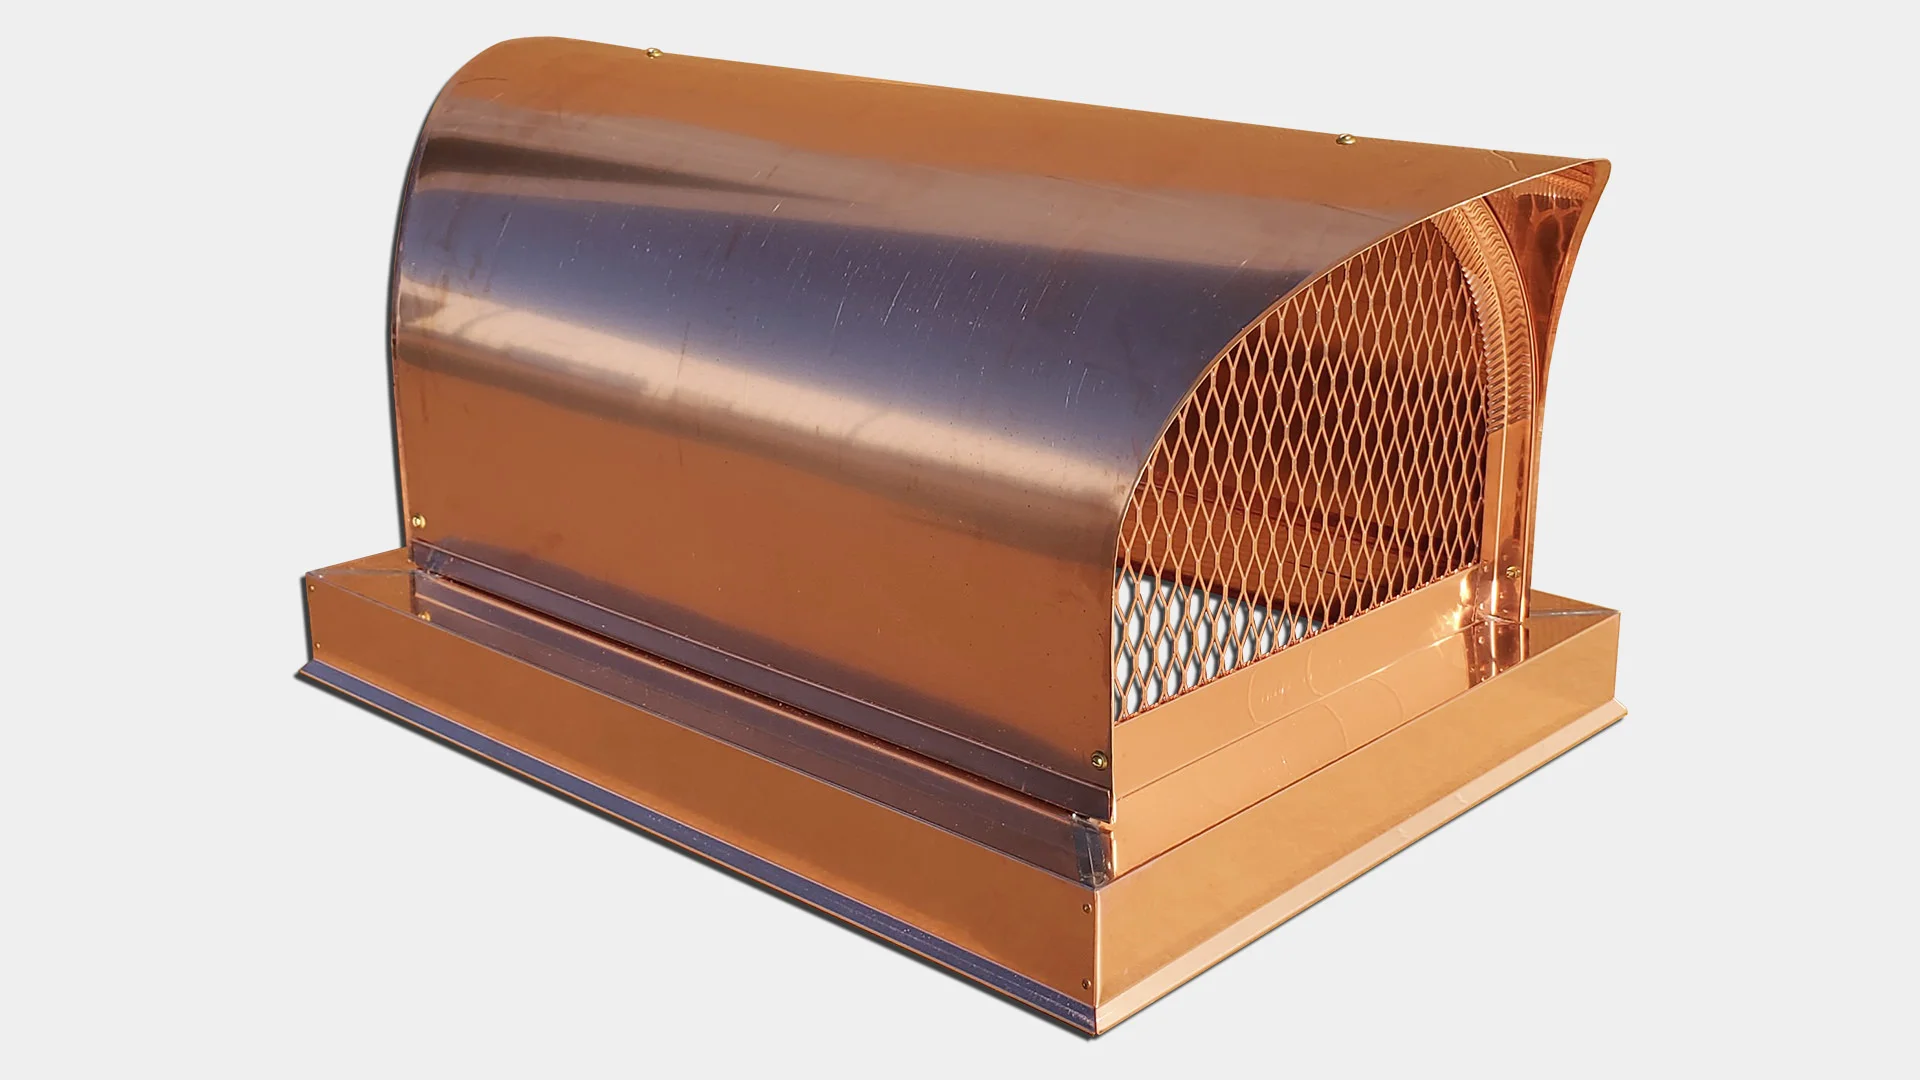 CC105 - Decorative Covered wagon round roof multi flue chimney cap copper